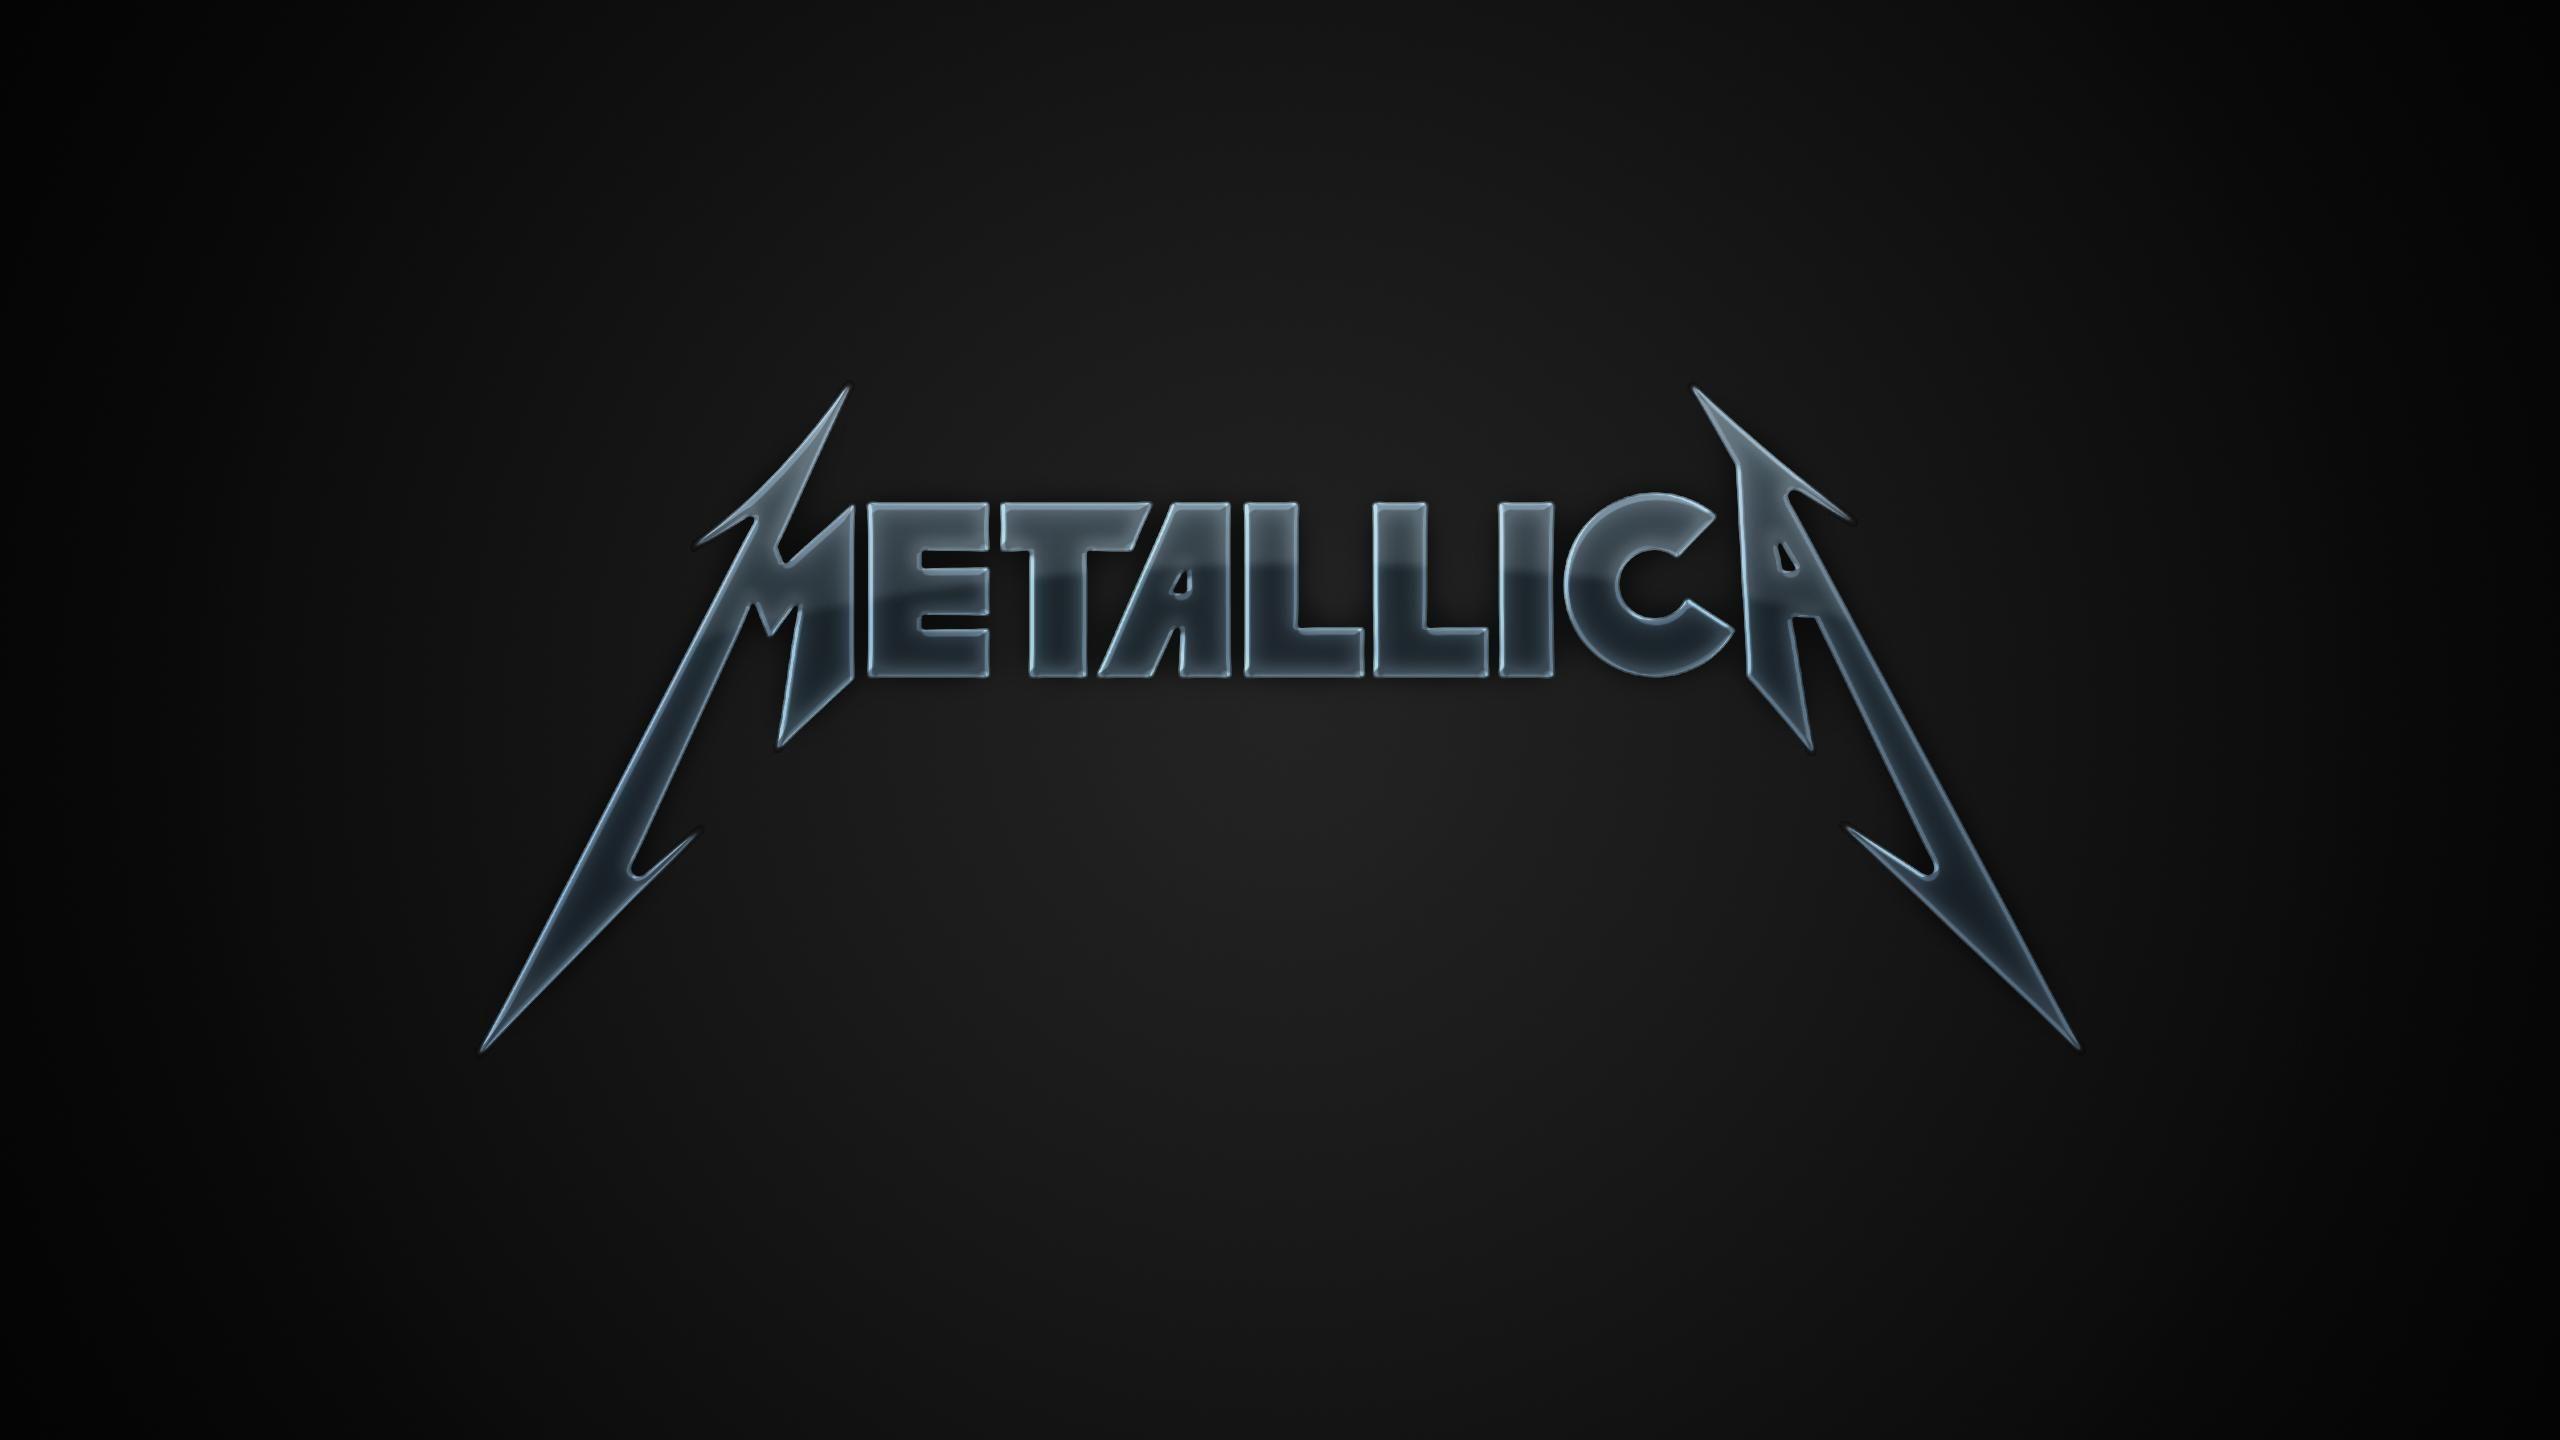 Metallica Wallpaper Image & Picture